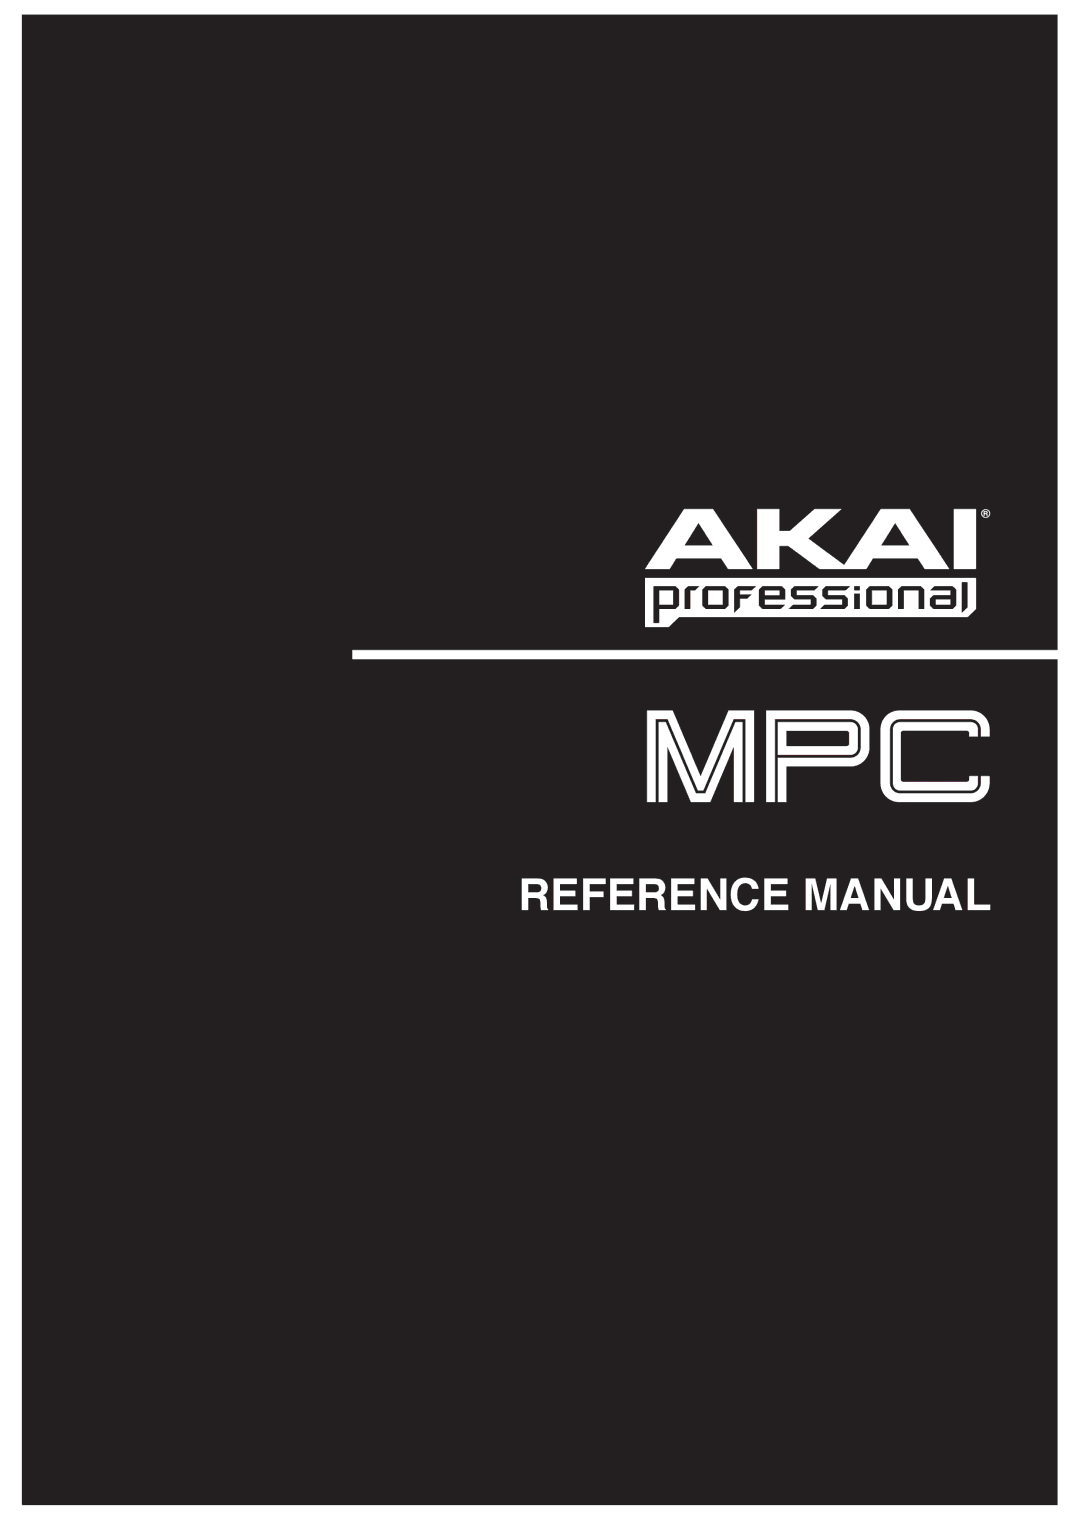 Akai MPC manual Reference Manual 